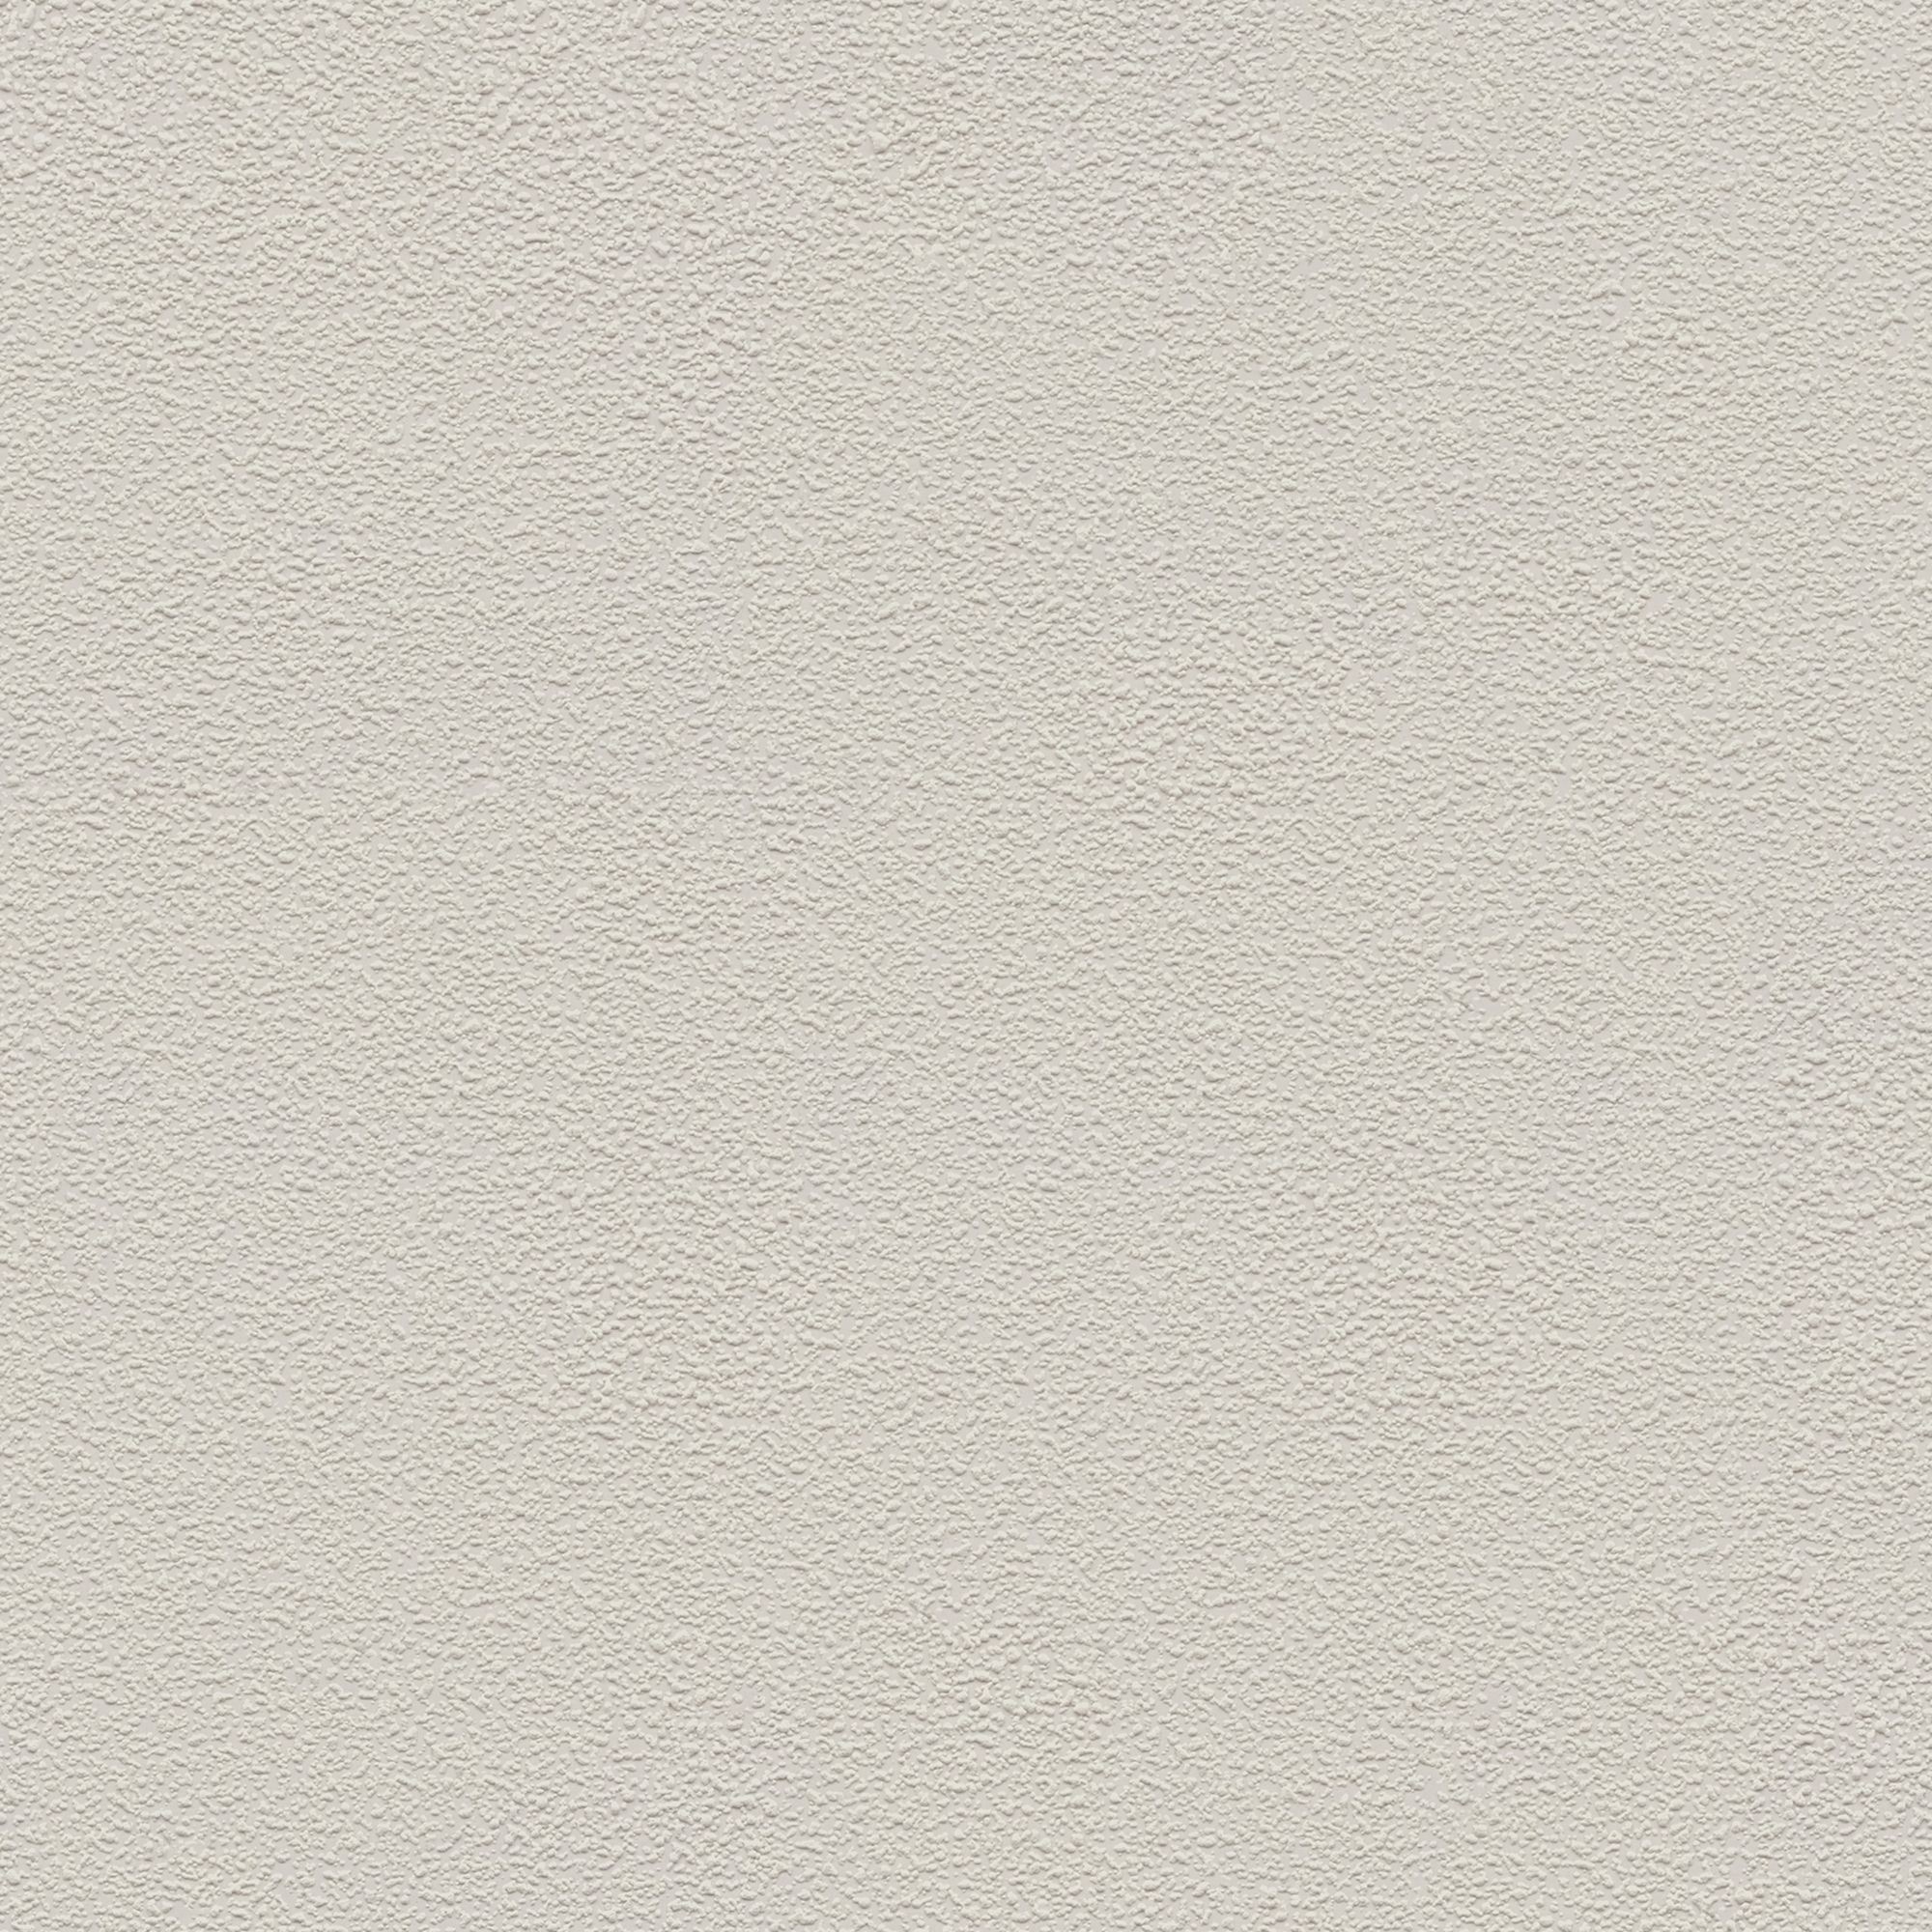 Vauquois Cream Plaster effect Textured Wallpaper Sample